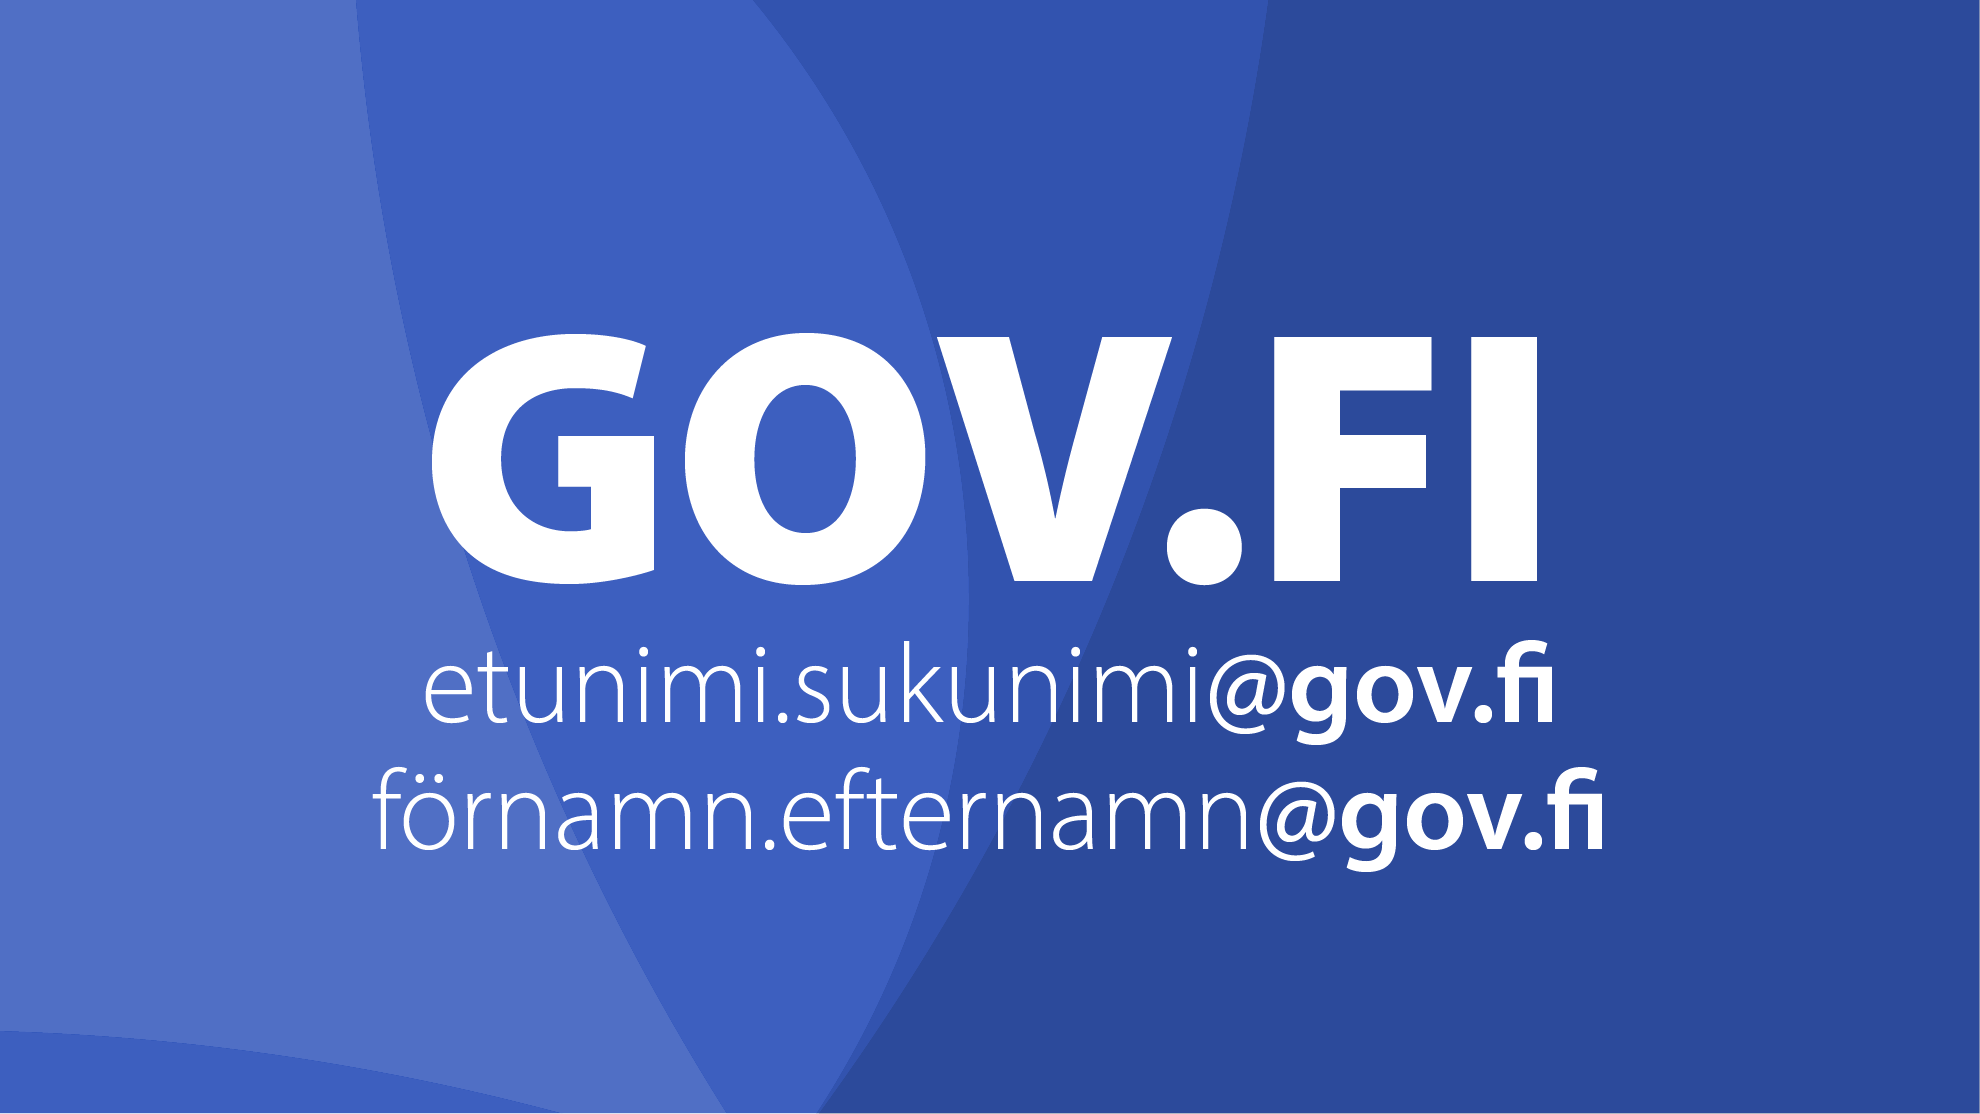 Gov.fi etunimi.sukunimi@gov.fi förnamn.efternamn@gov.fi